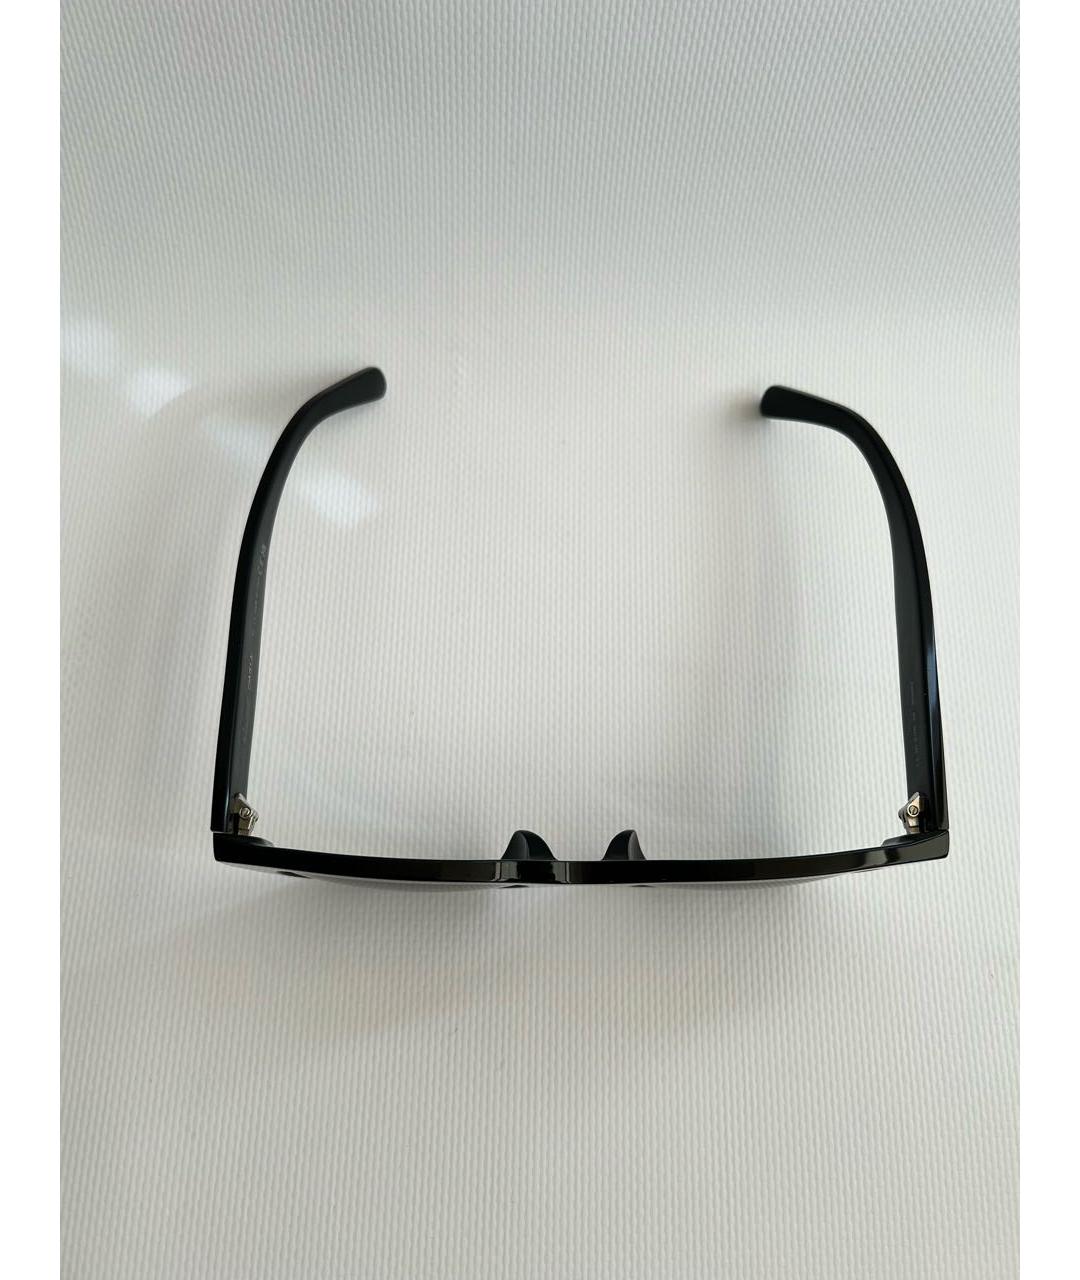 CELINE PRE-OWNED Черные солнцезащитные очки, фото 8